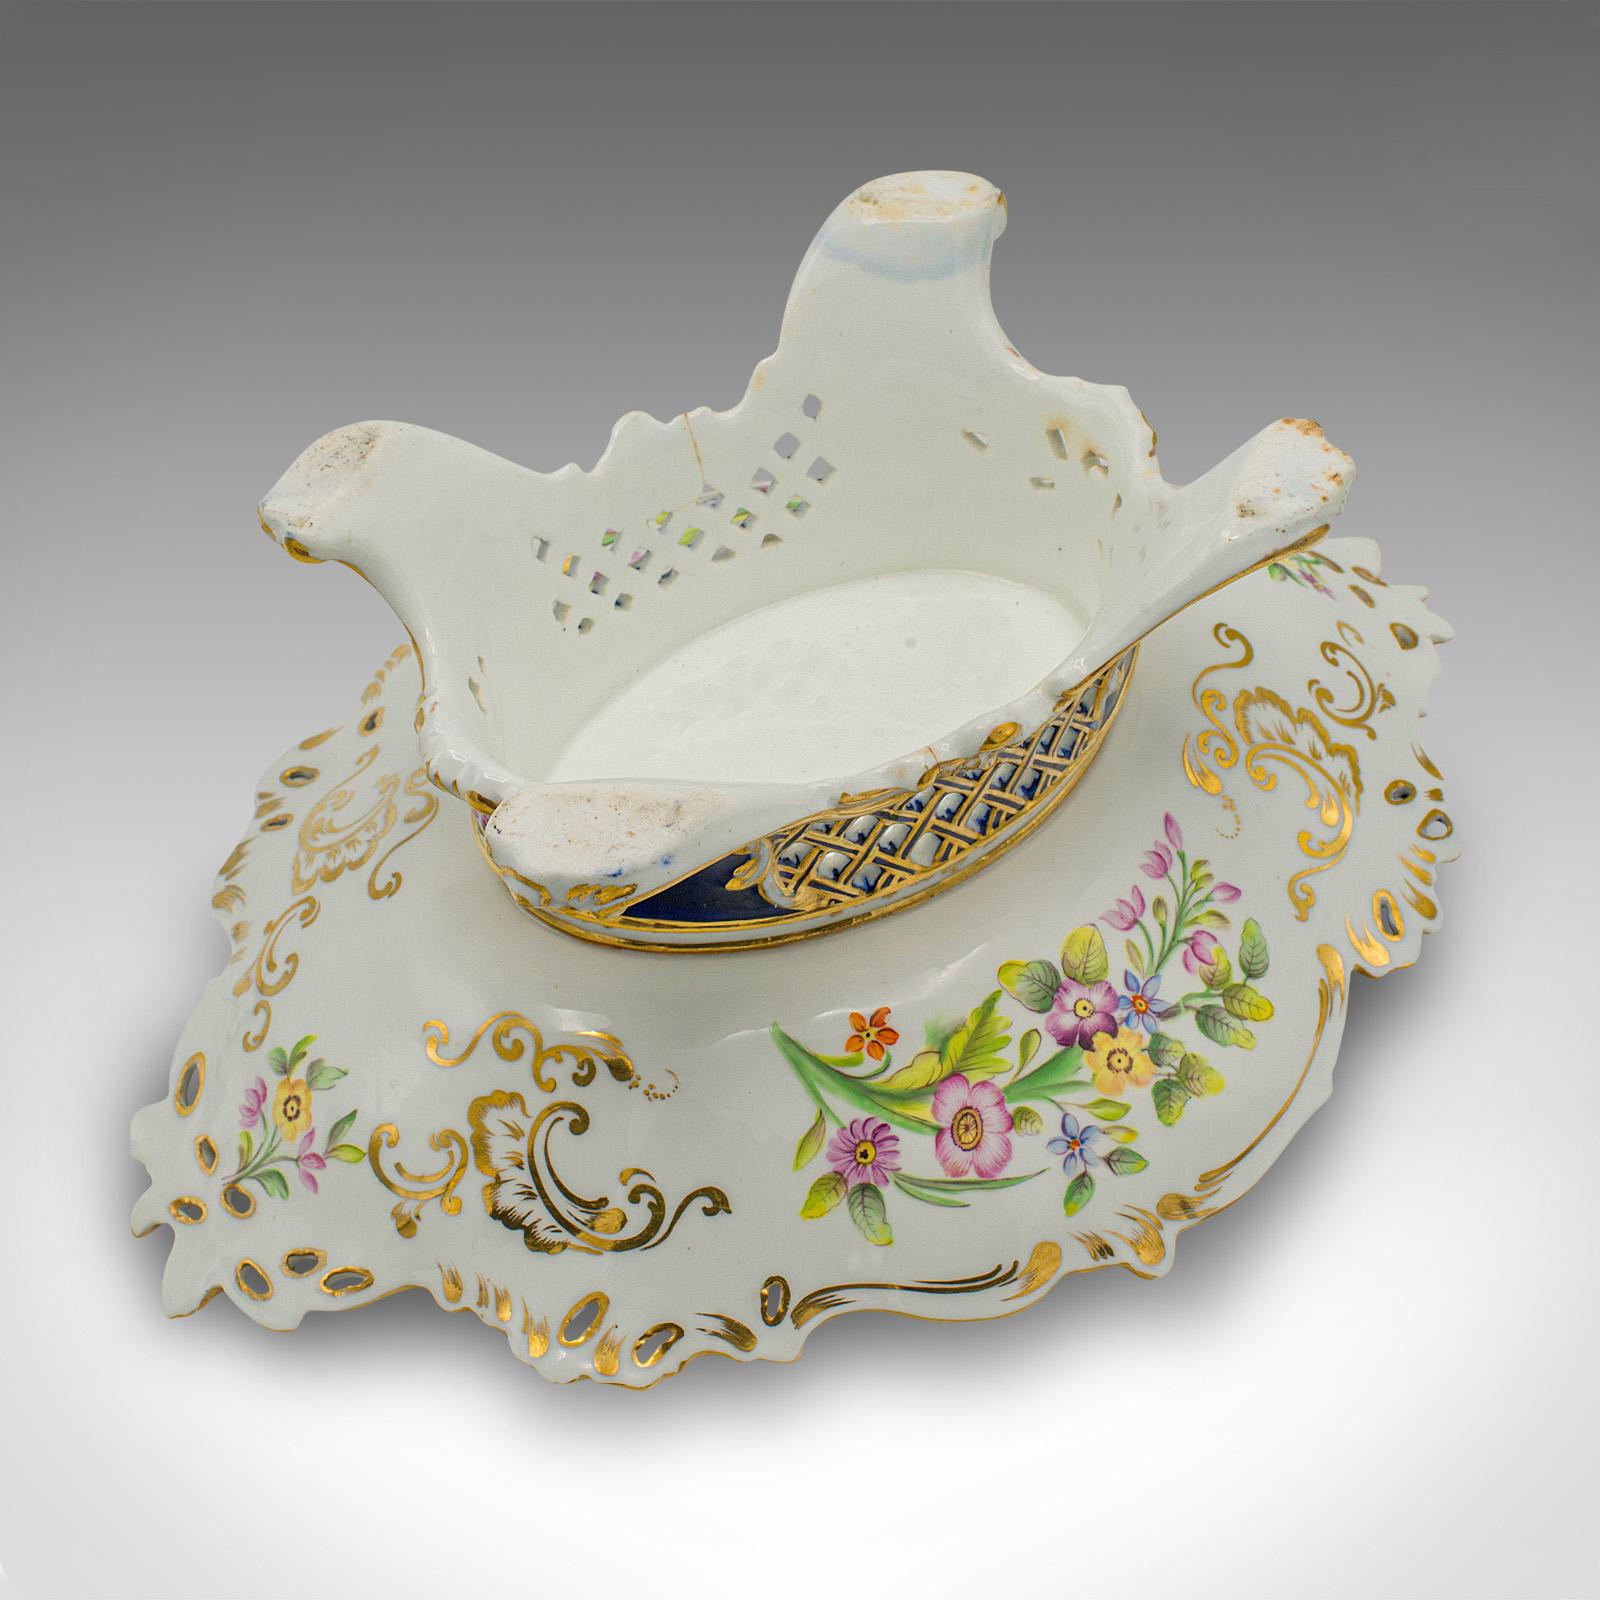 Antique Decorative Comport, English, Ceramic Serving Dish, Edwardian, circa 1910 For Sale 3